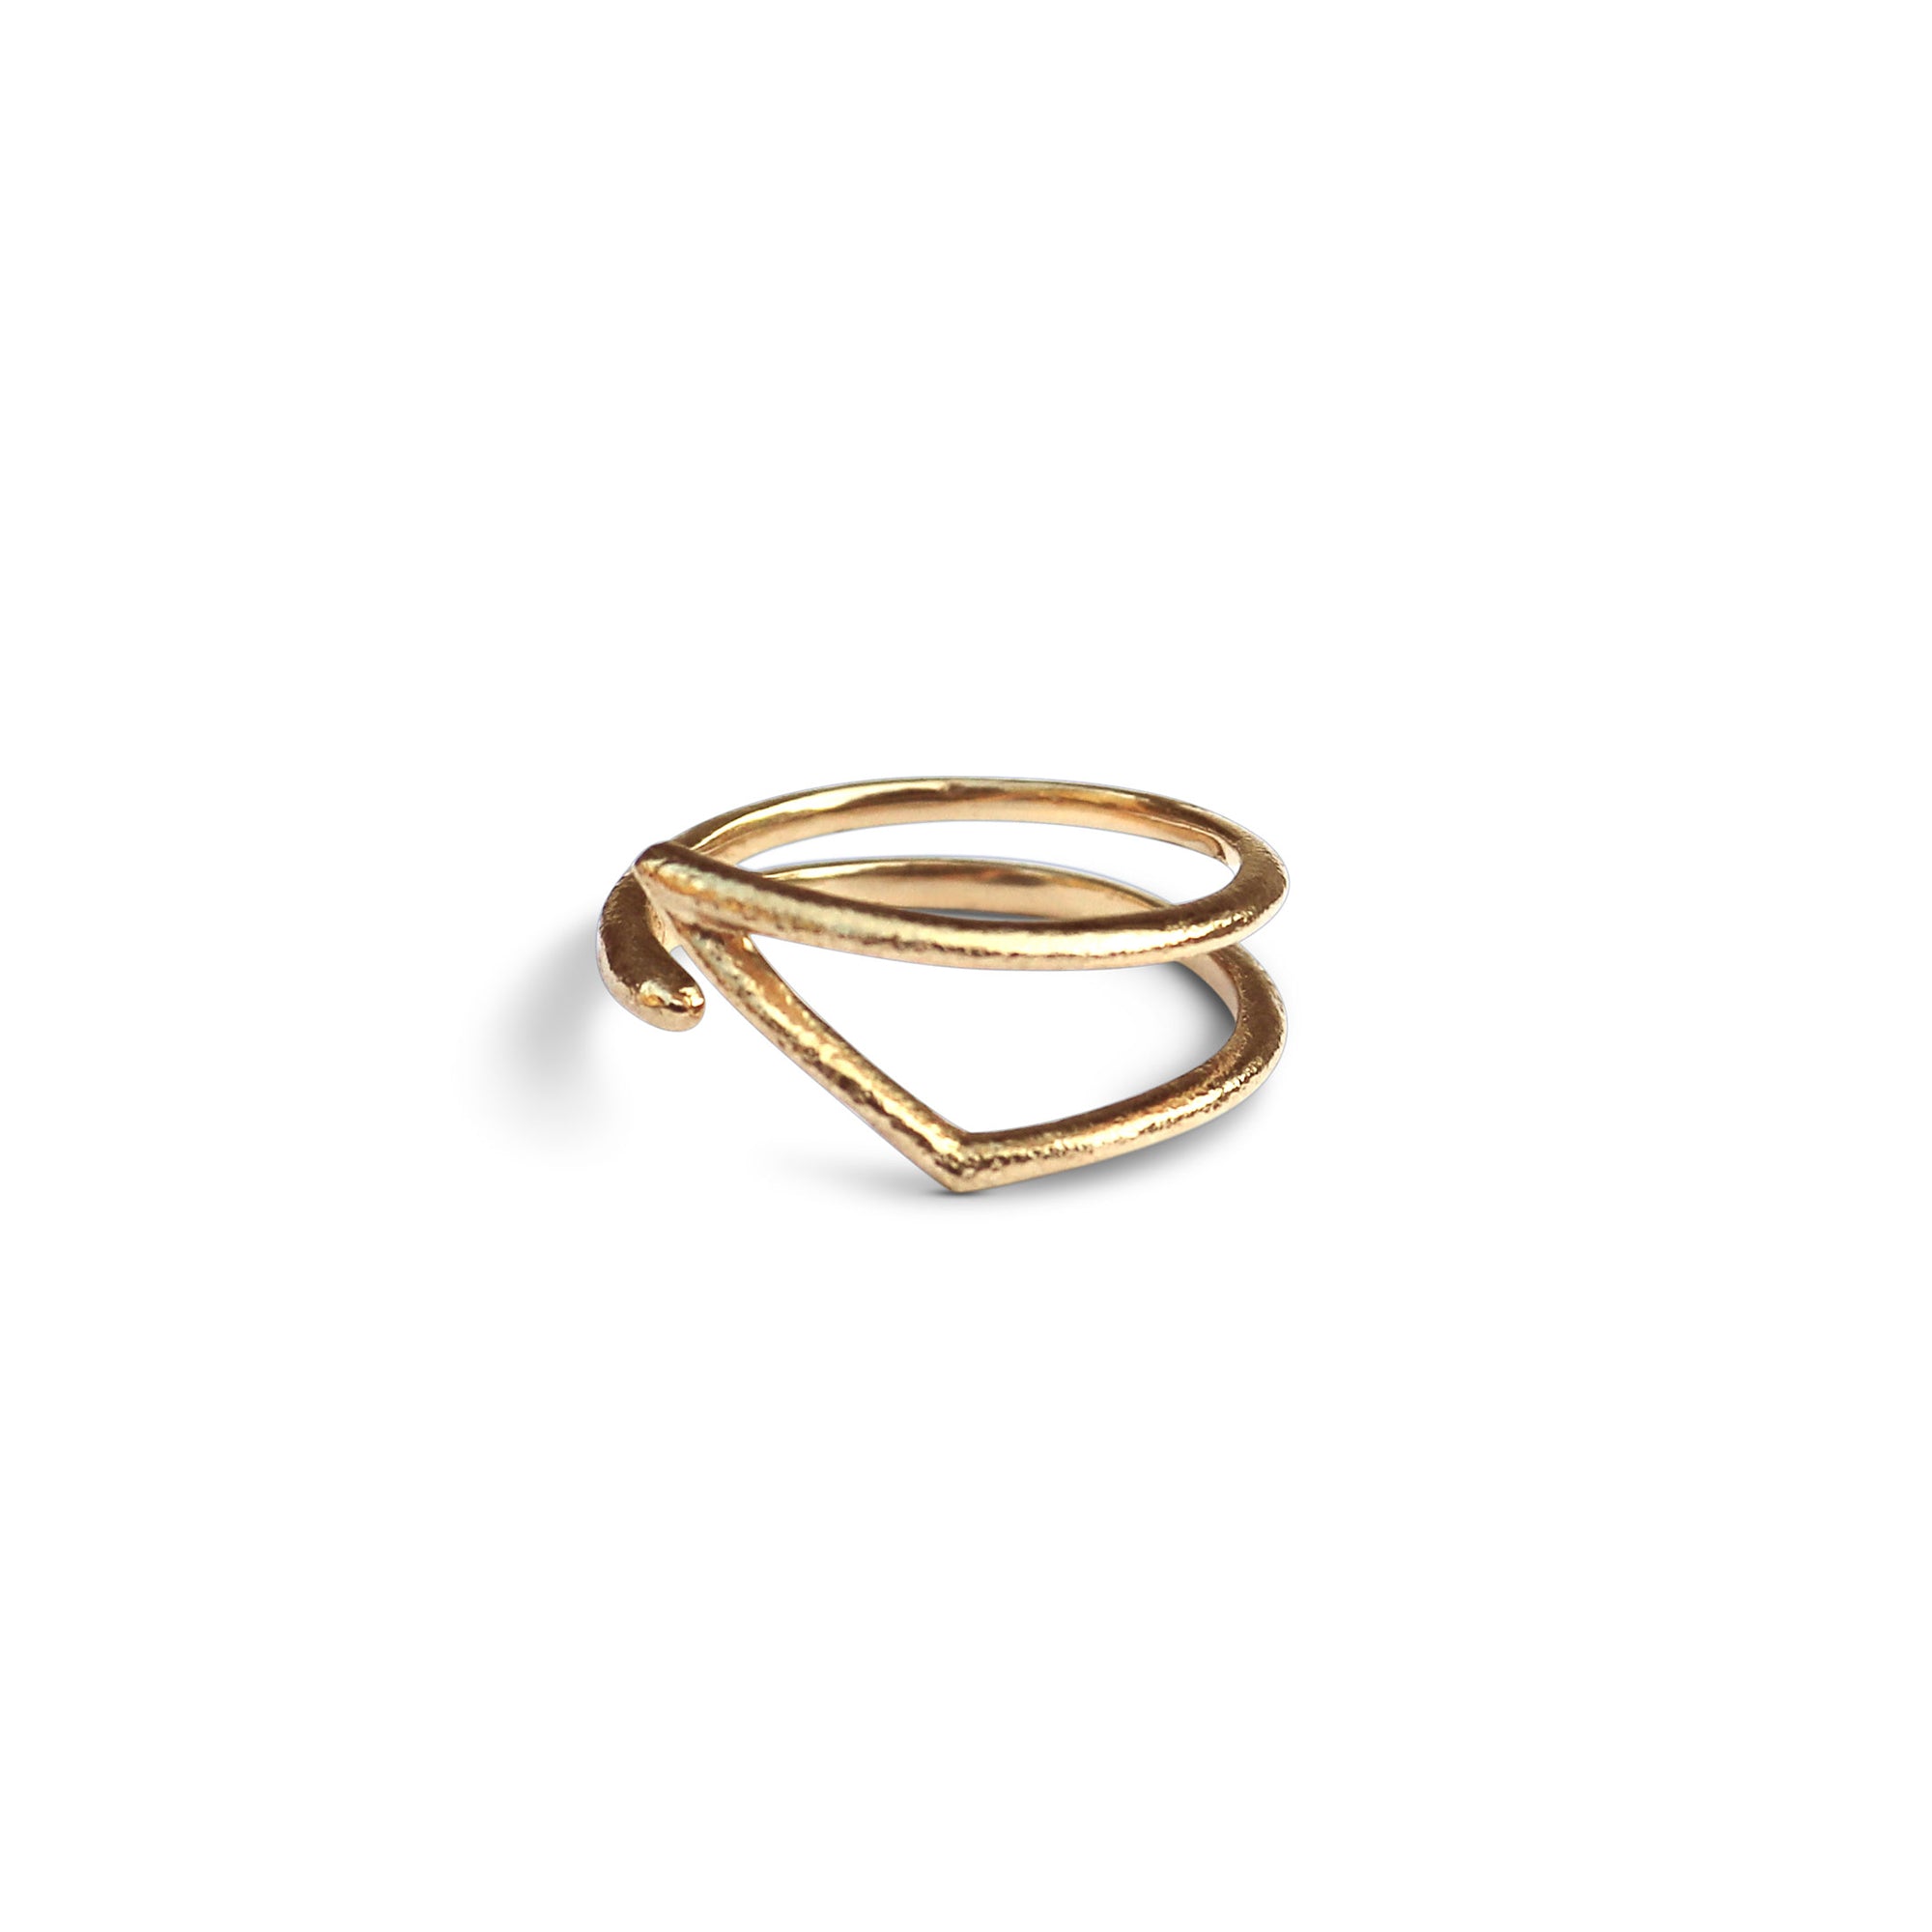 Aimée Kennedy - Wedge Ring - 14K Gold Adjustable